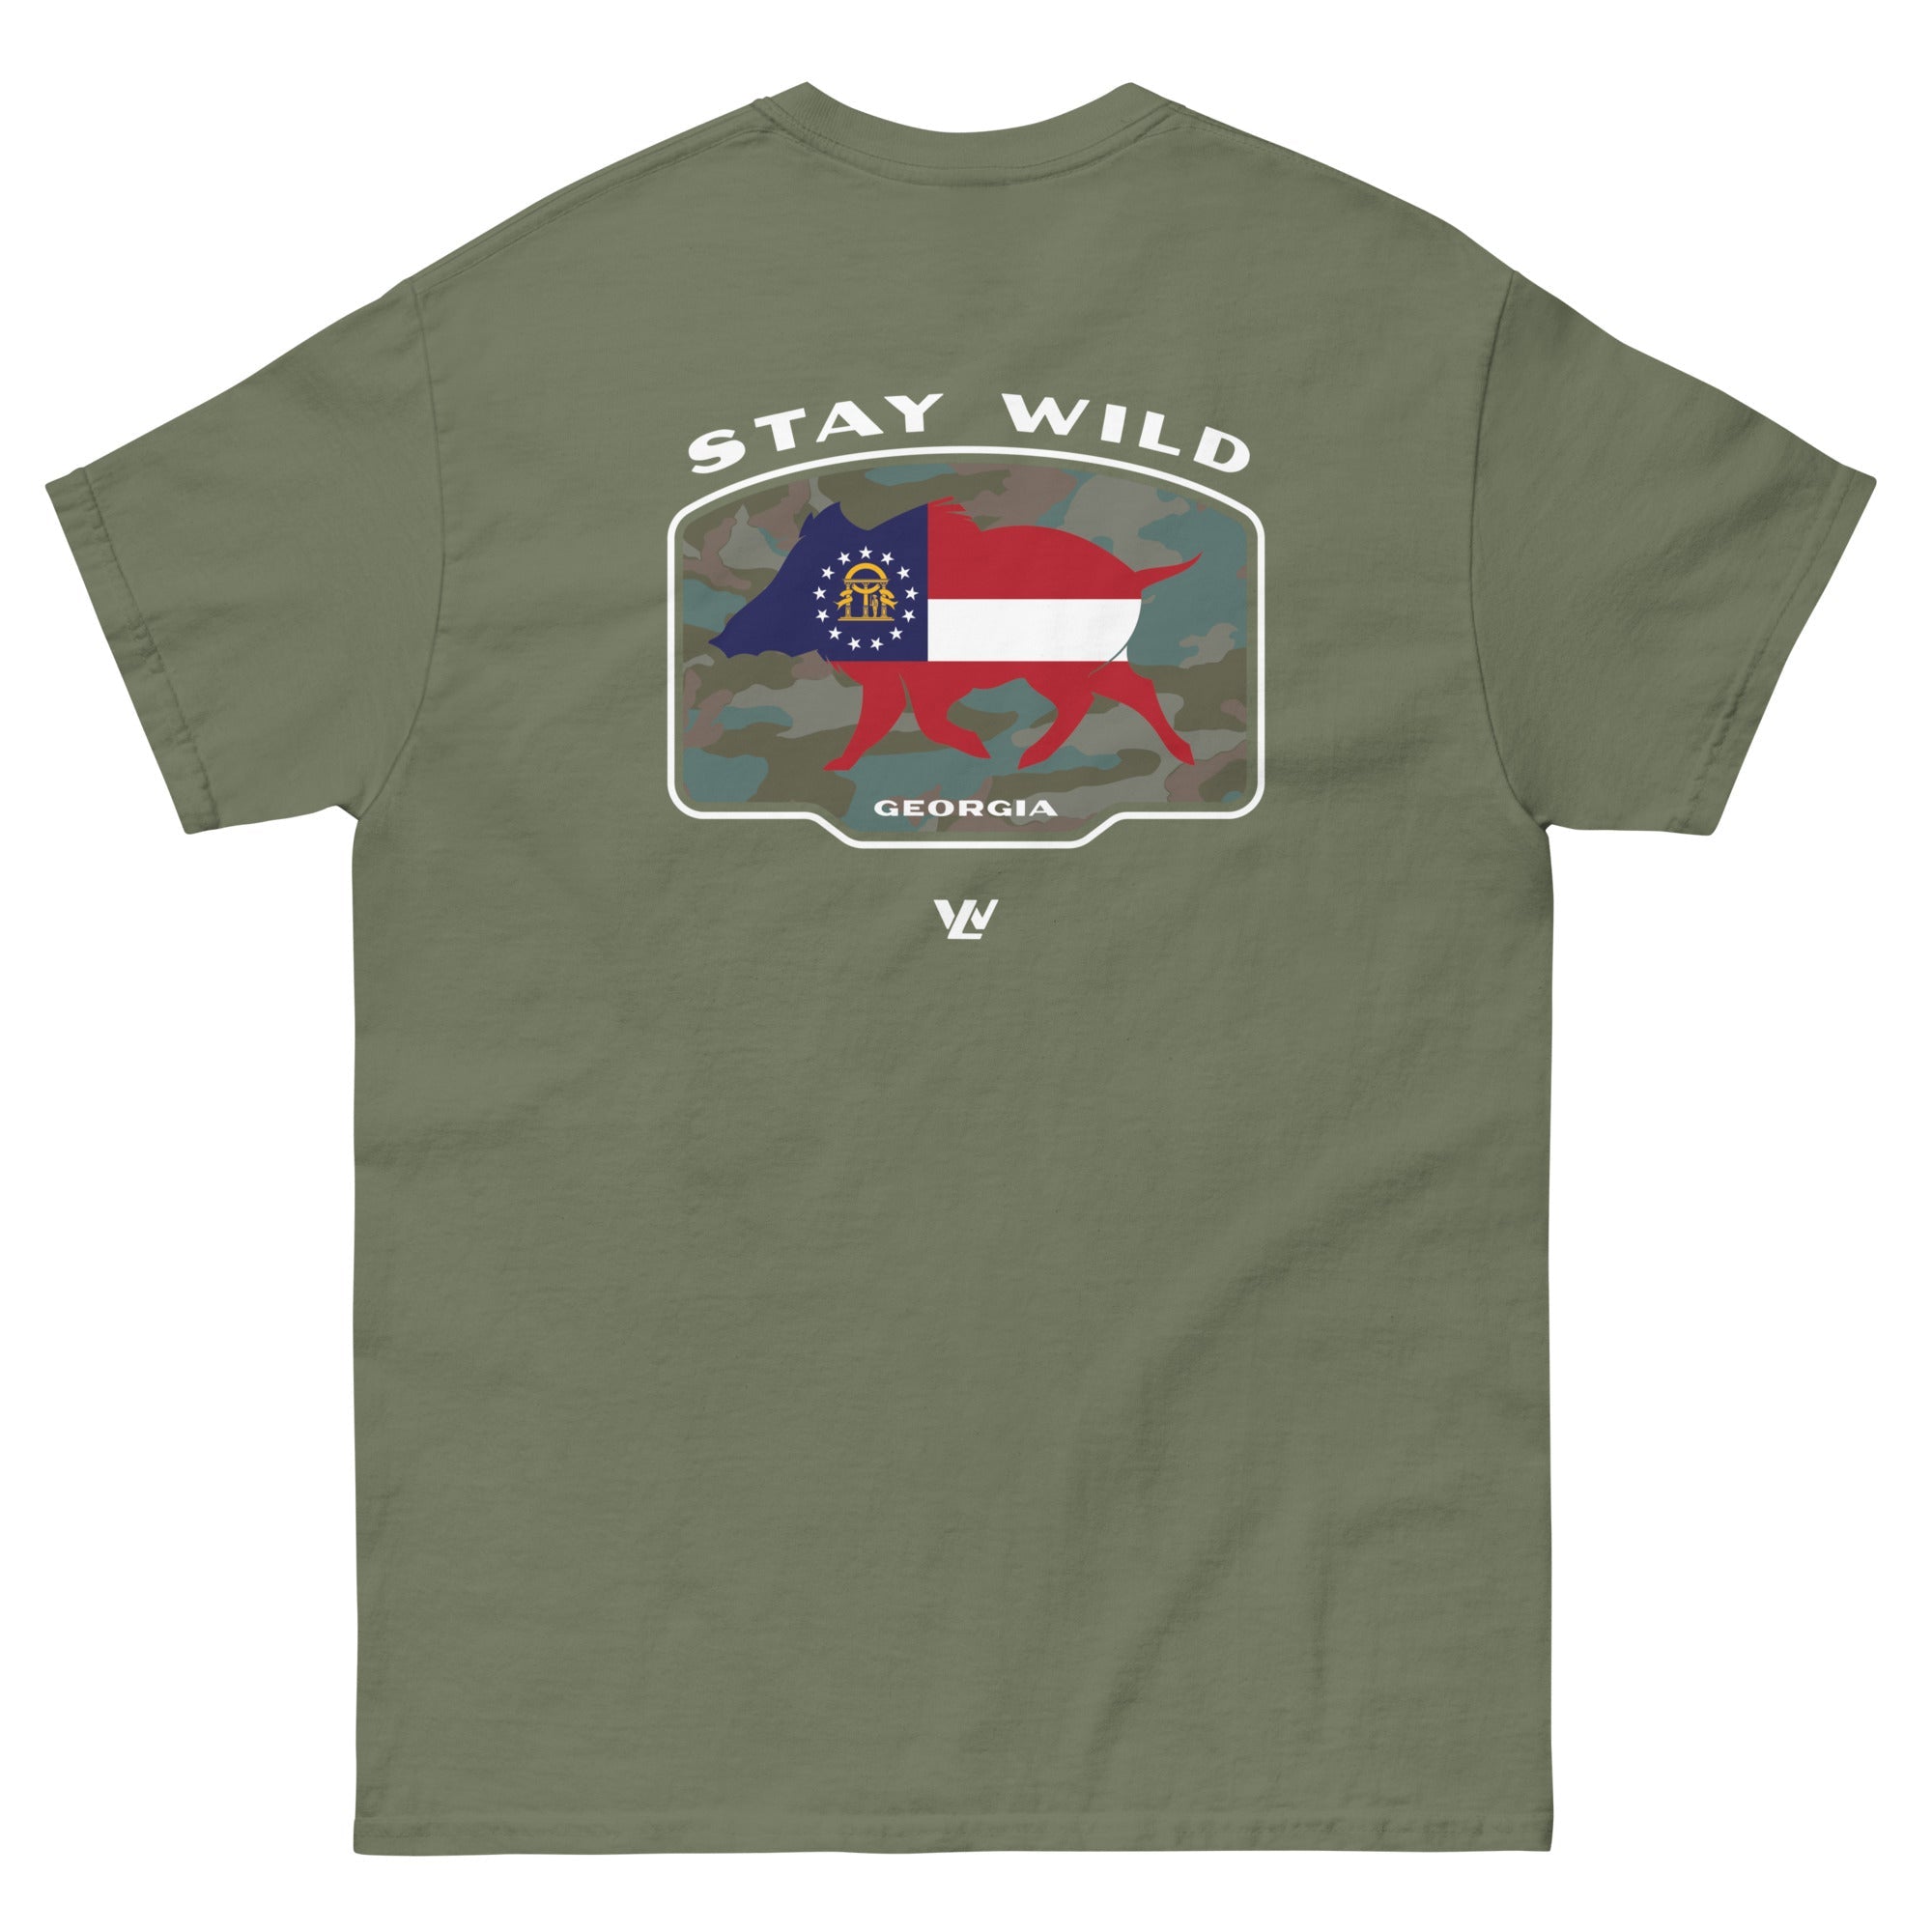 Stay Wild Georgia T-Shirt - Wilding Life